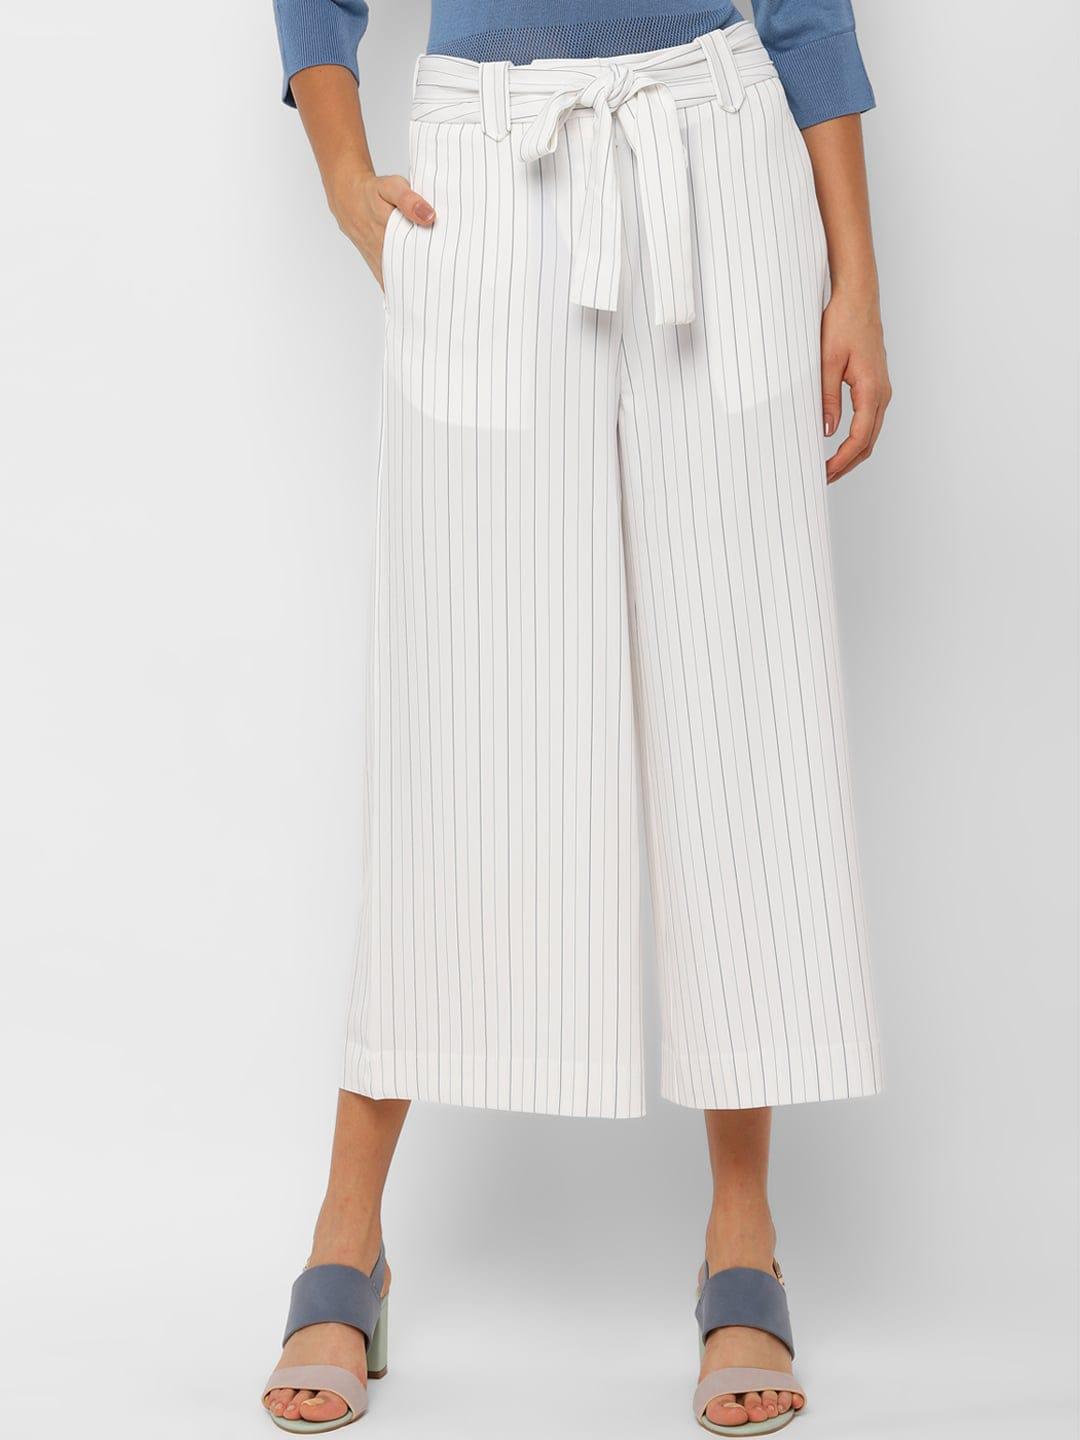 allen-solly-woman-women-white-striped-culottes-trousers